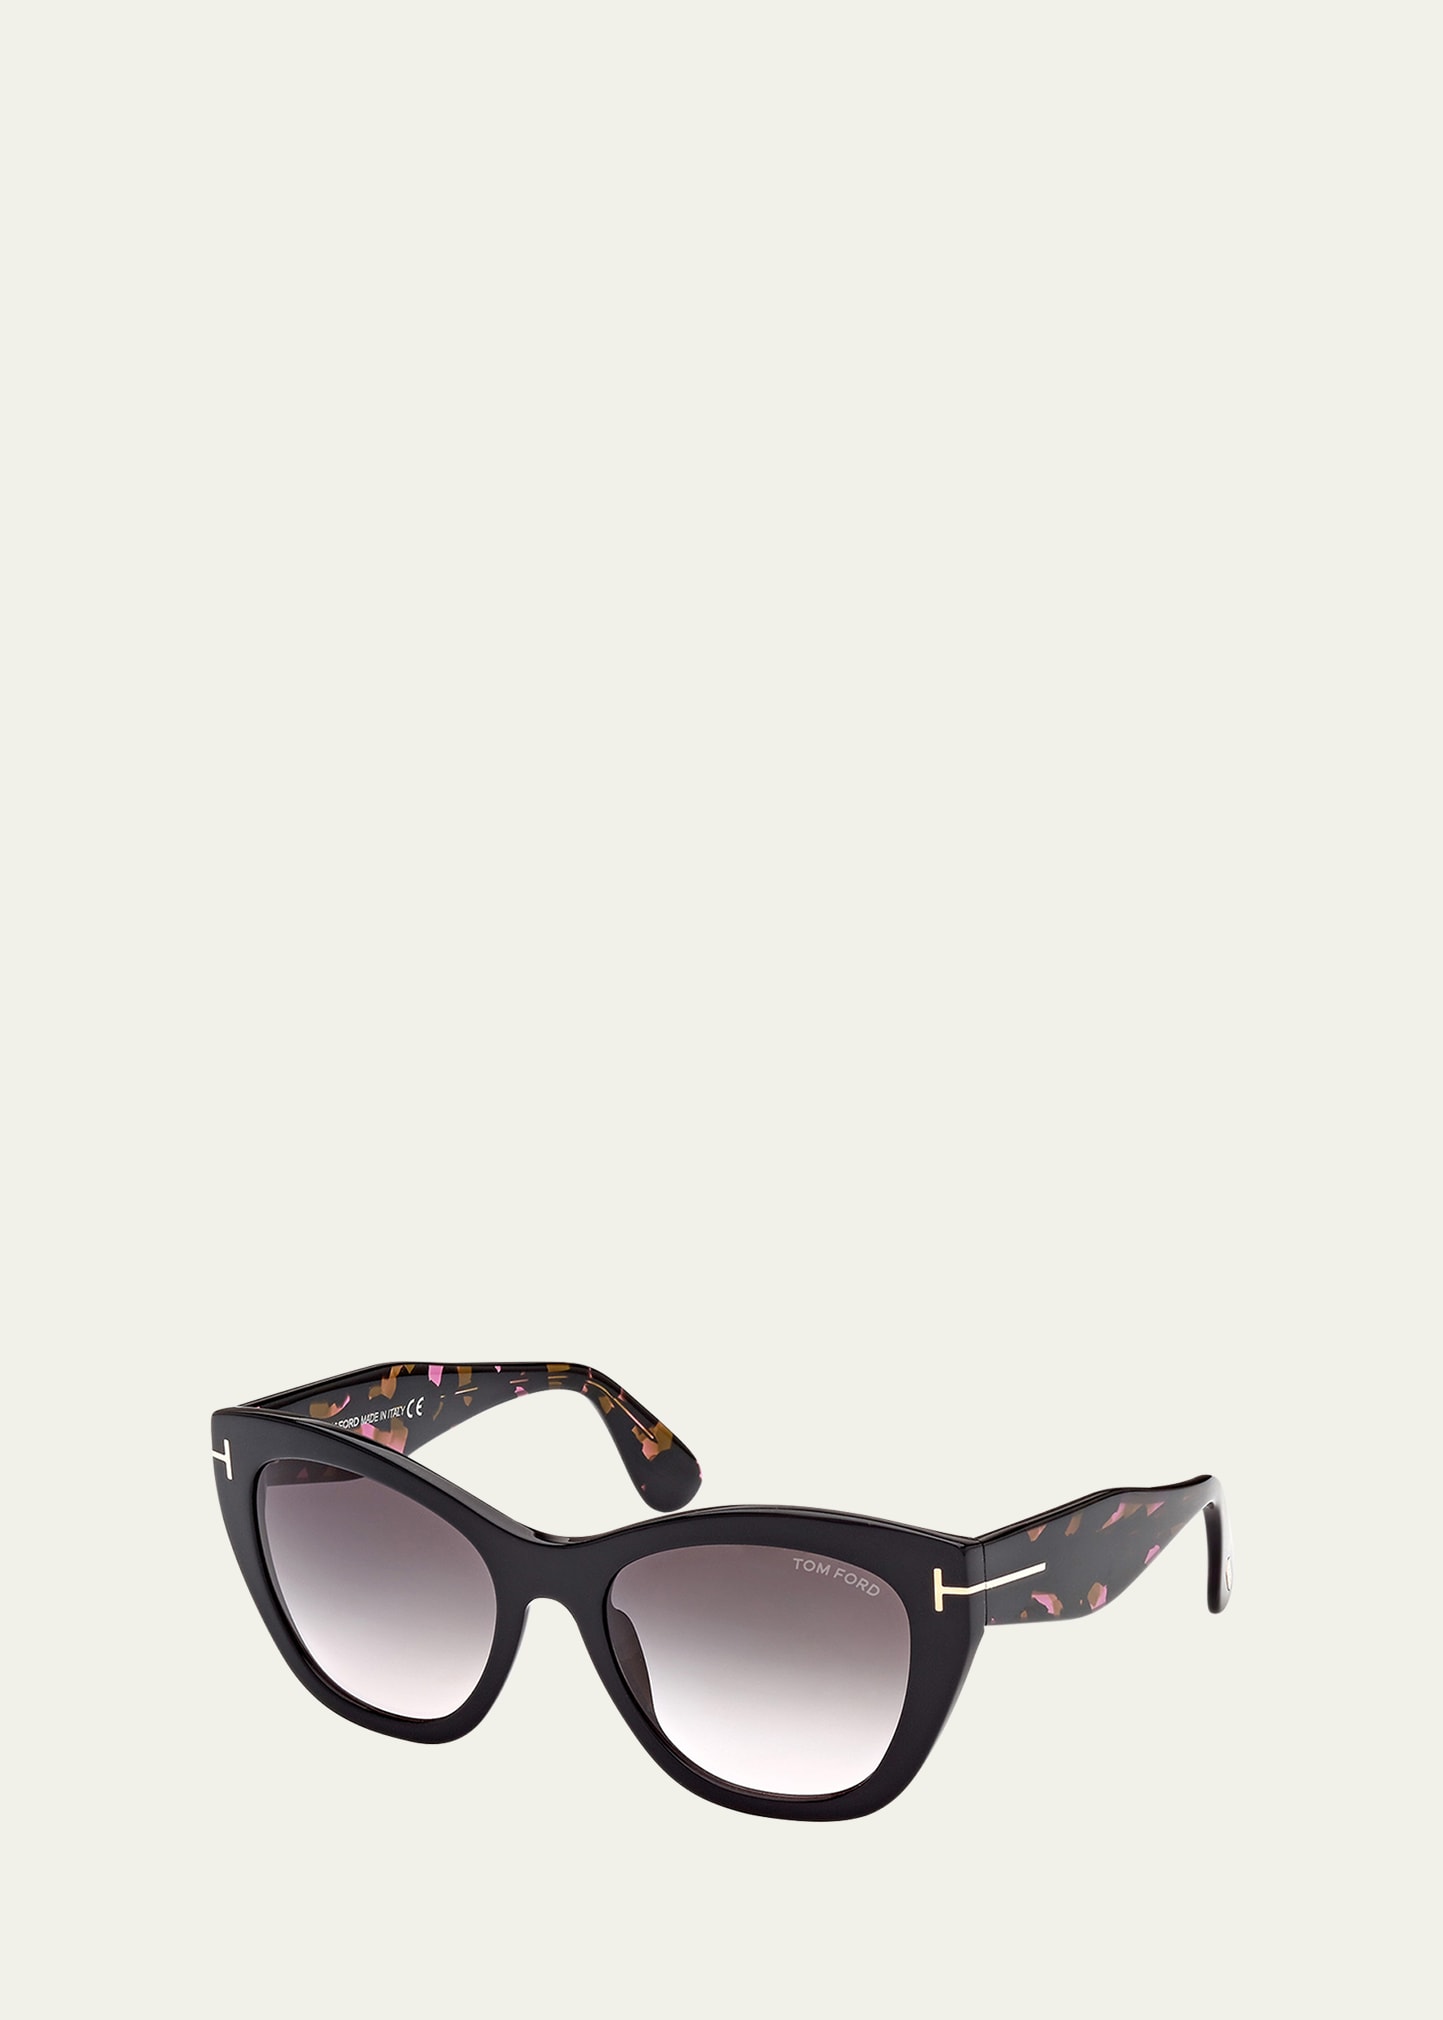 Tom Ford Square Acetate Sunglasses In Black